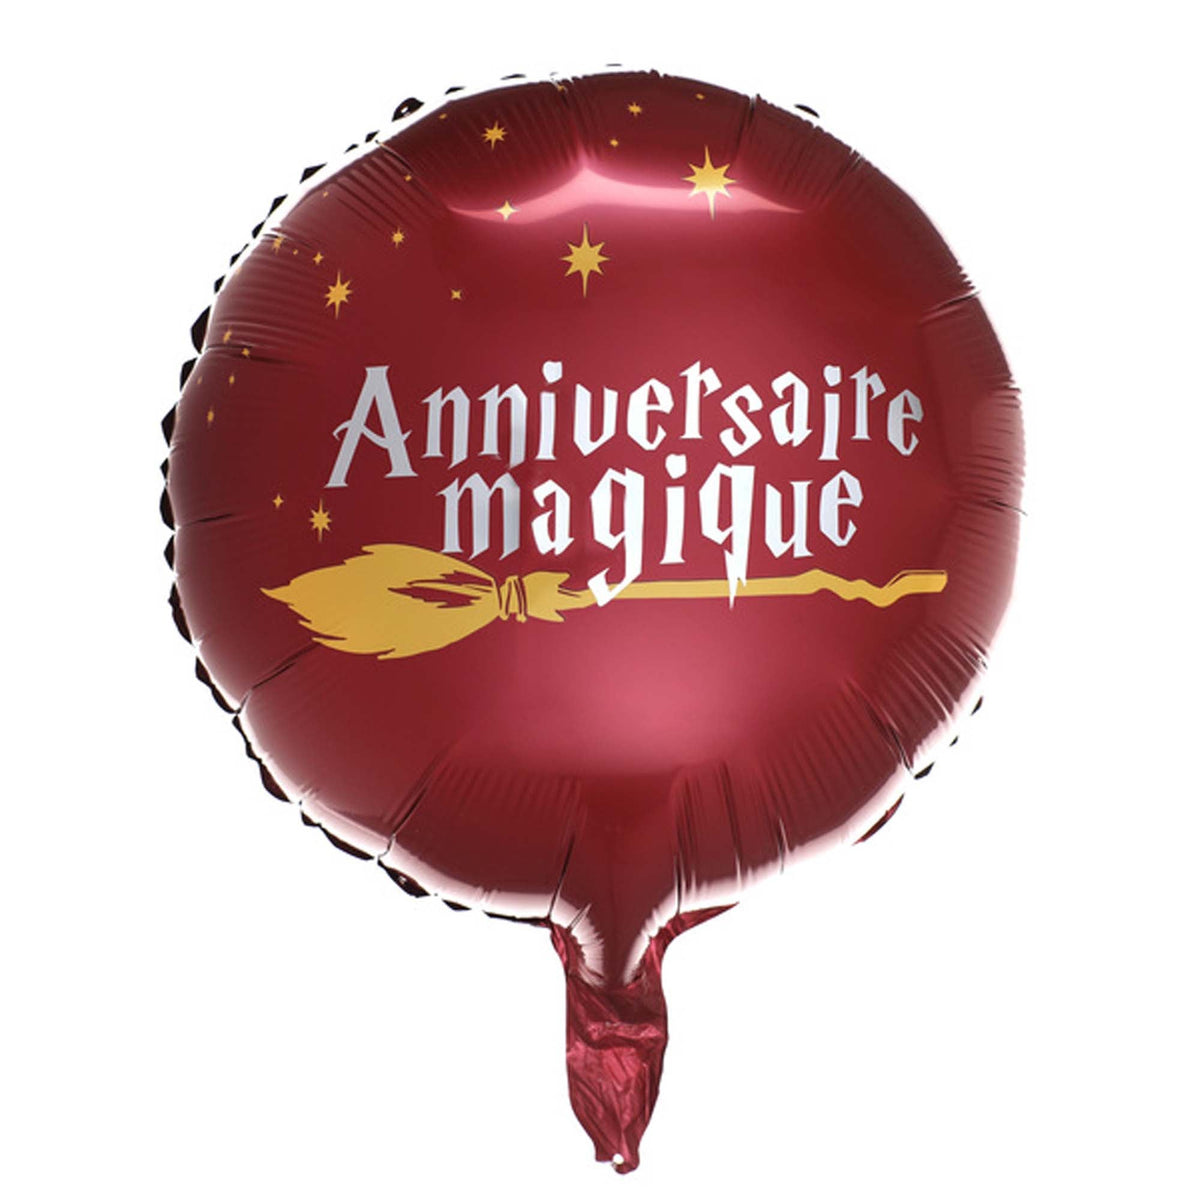 SANTEX Balloons "Anniversaire Magique" Birthday Round Foil Balloon, 18 Inches, 1 Count